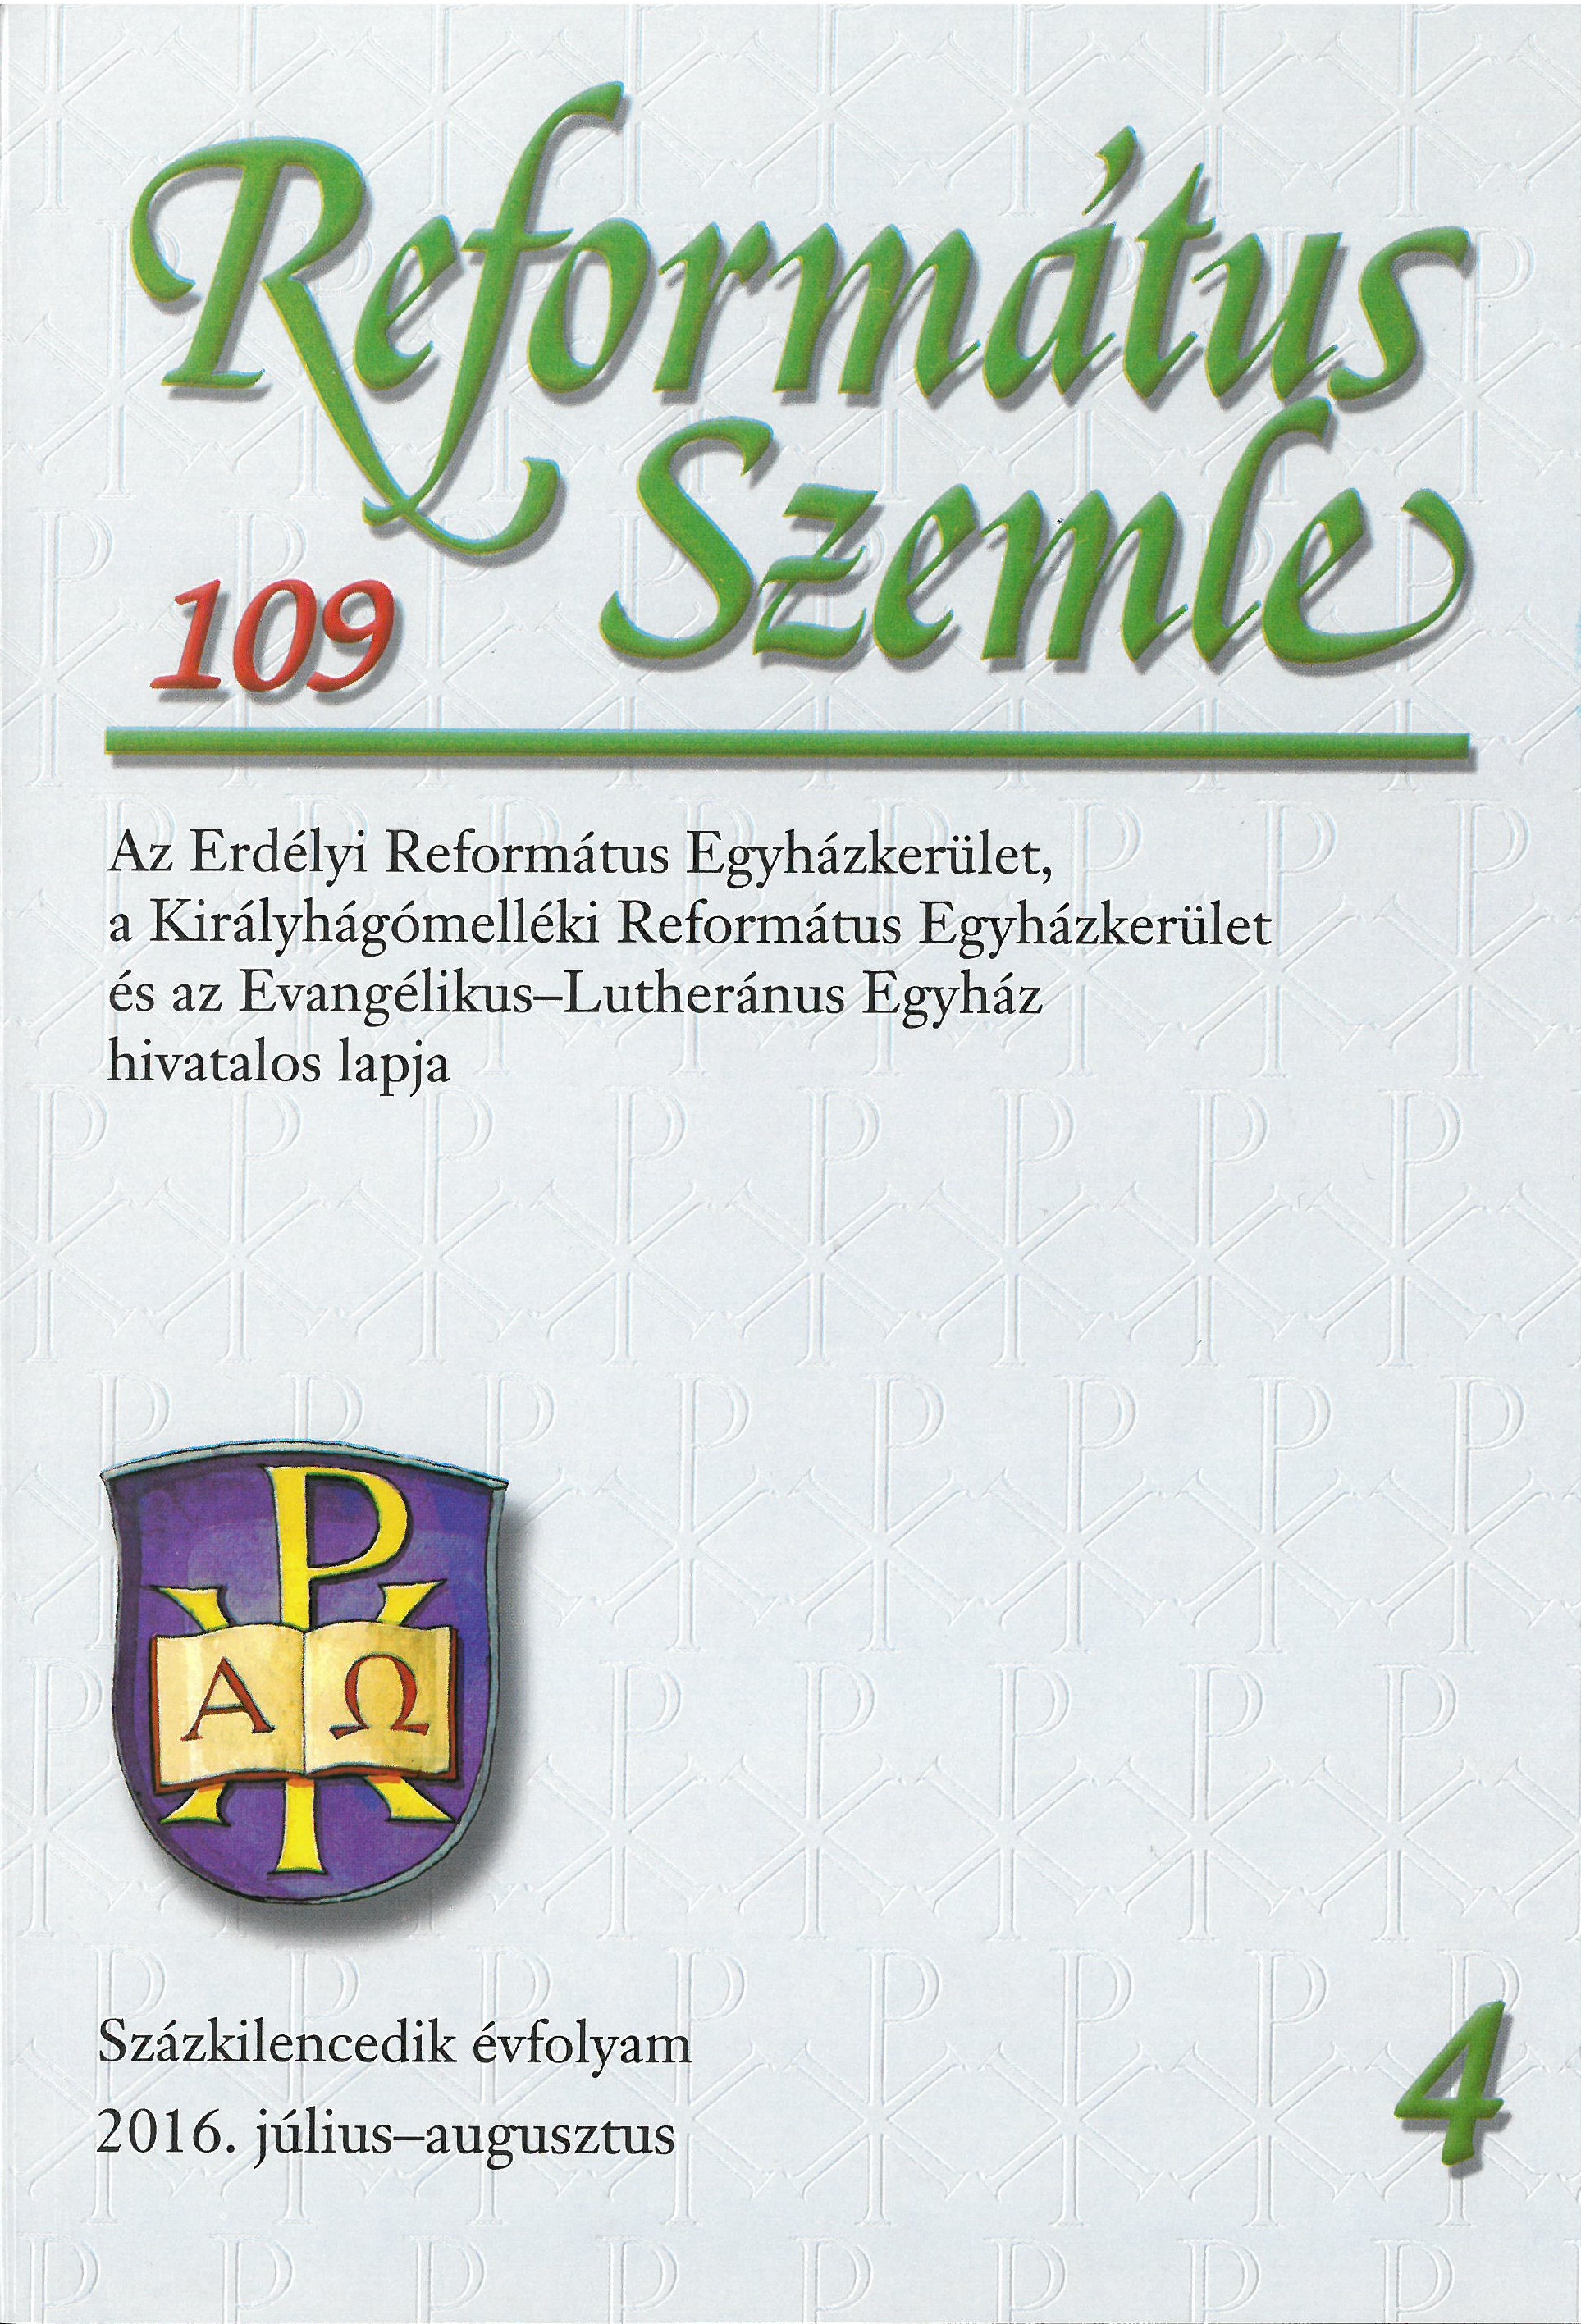 In memoriam of the Reformed Theologian István Tőkés (1916–2016) (Trans. by Nagy Irén) Cover Image